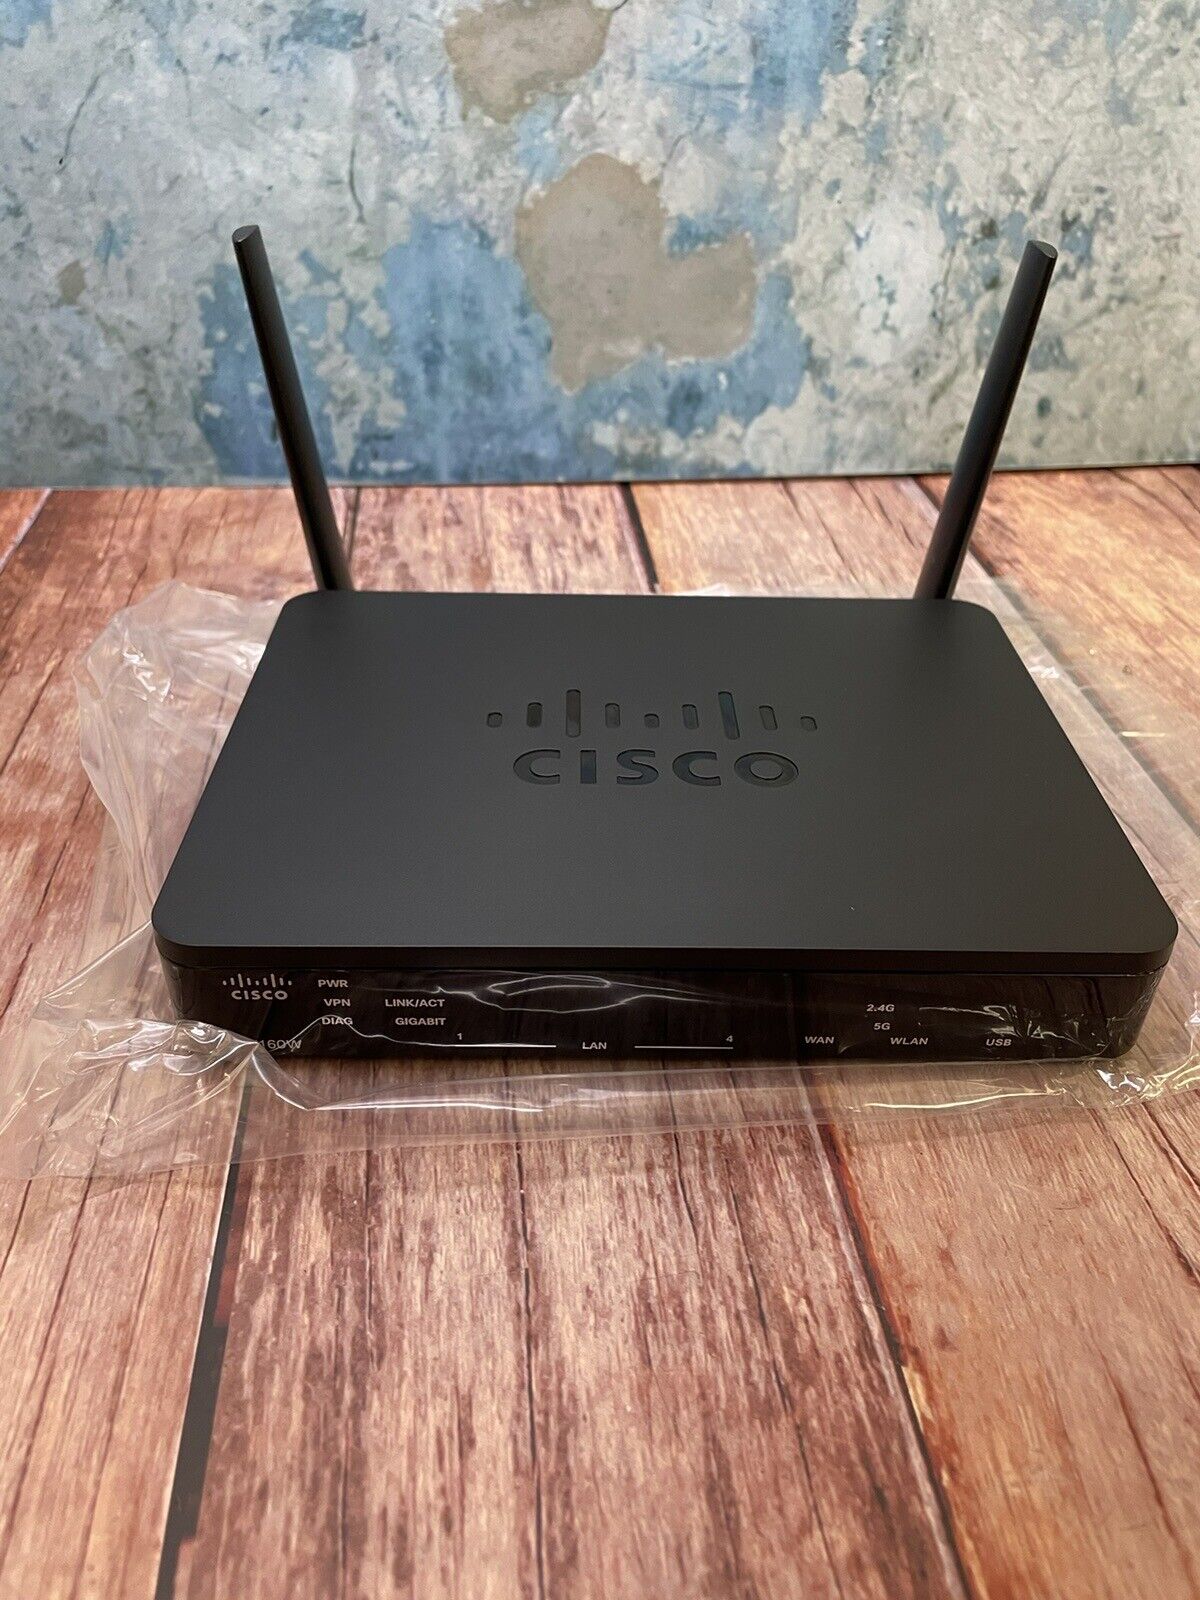 Cisco RV160W Wireless-AC VPN Router RV160W-A-K9-NA NEW IN BOX COMBO WAN 4Ge Lan.